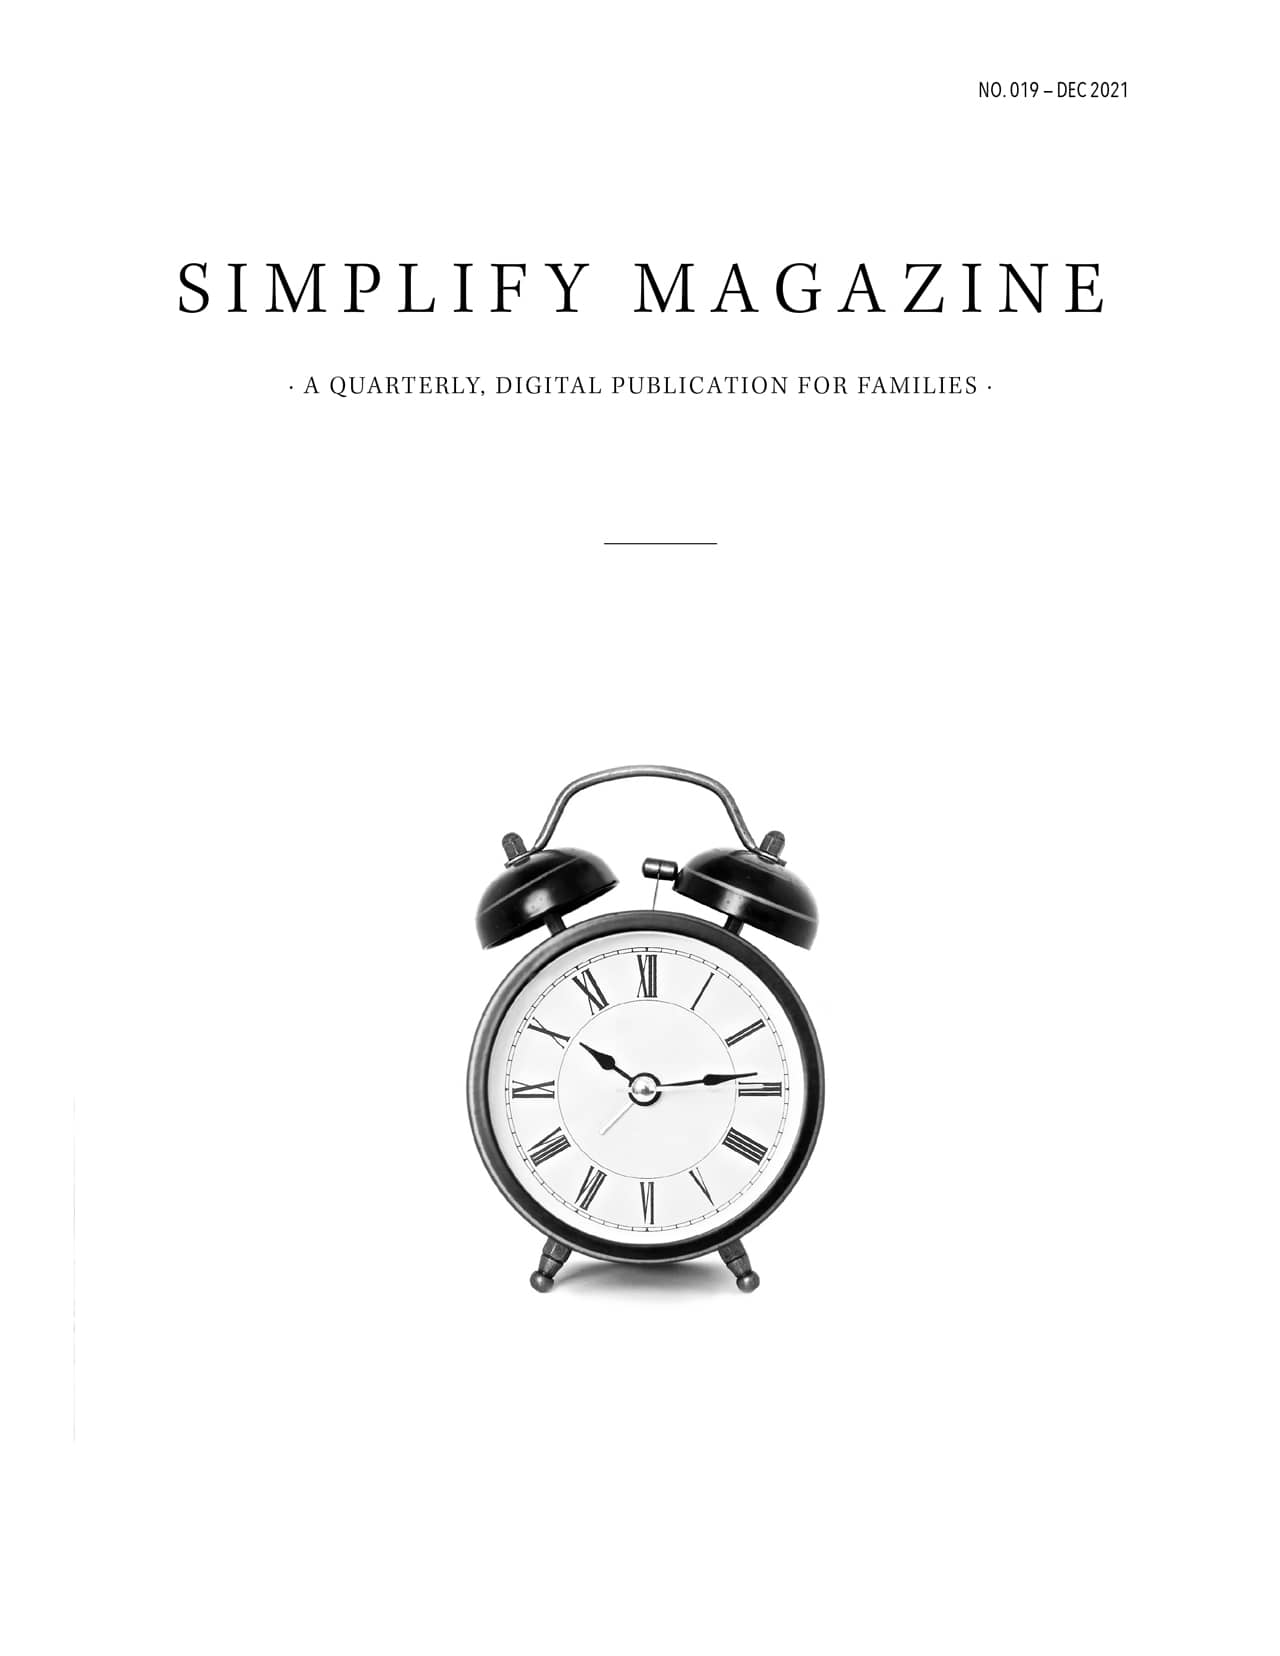 Simplify Magazine Issue #019